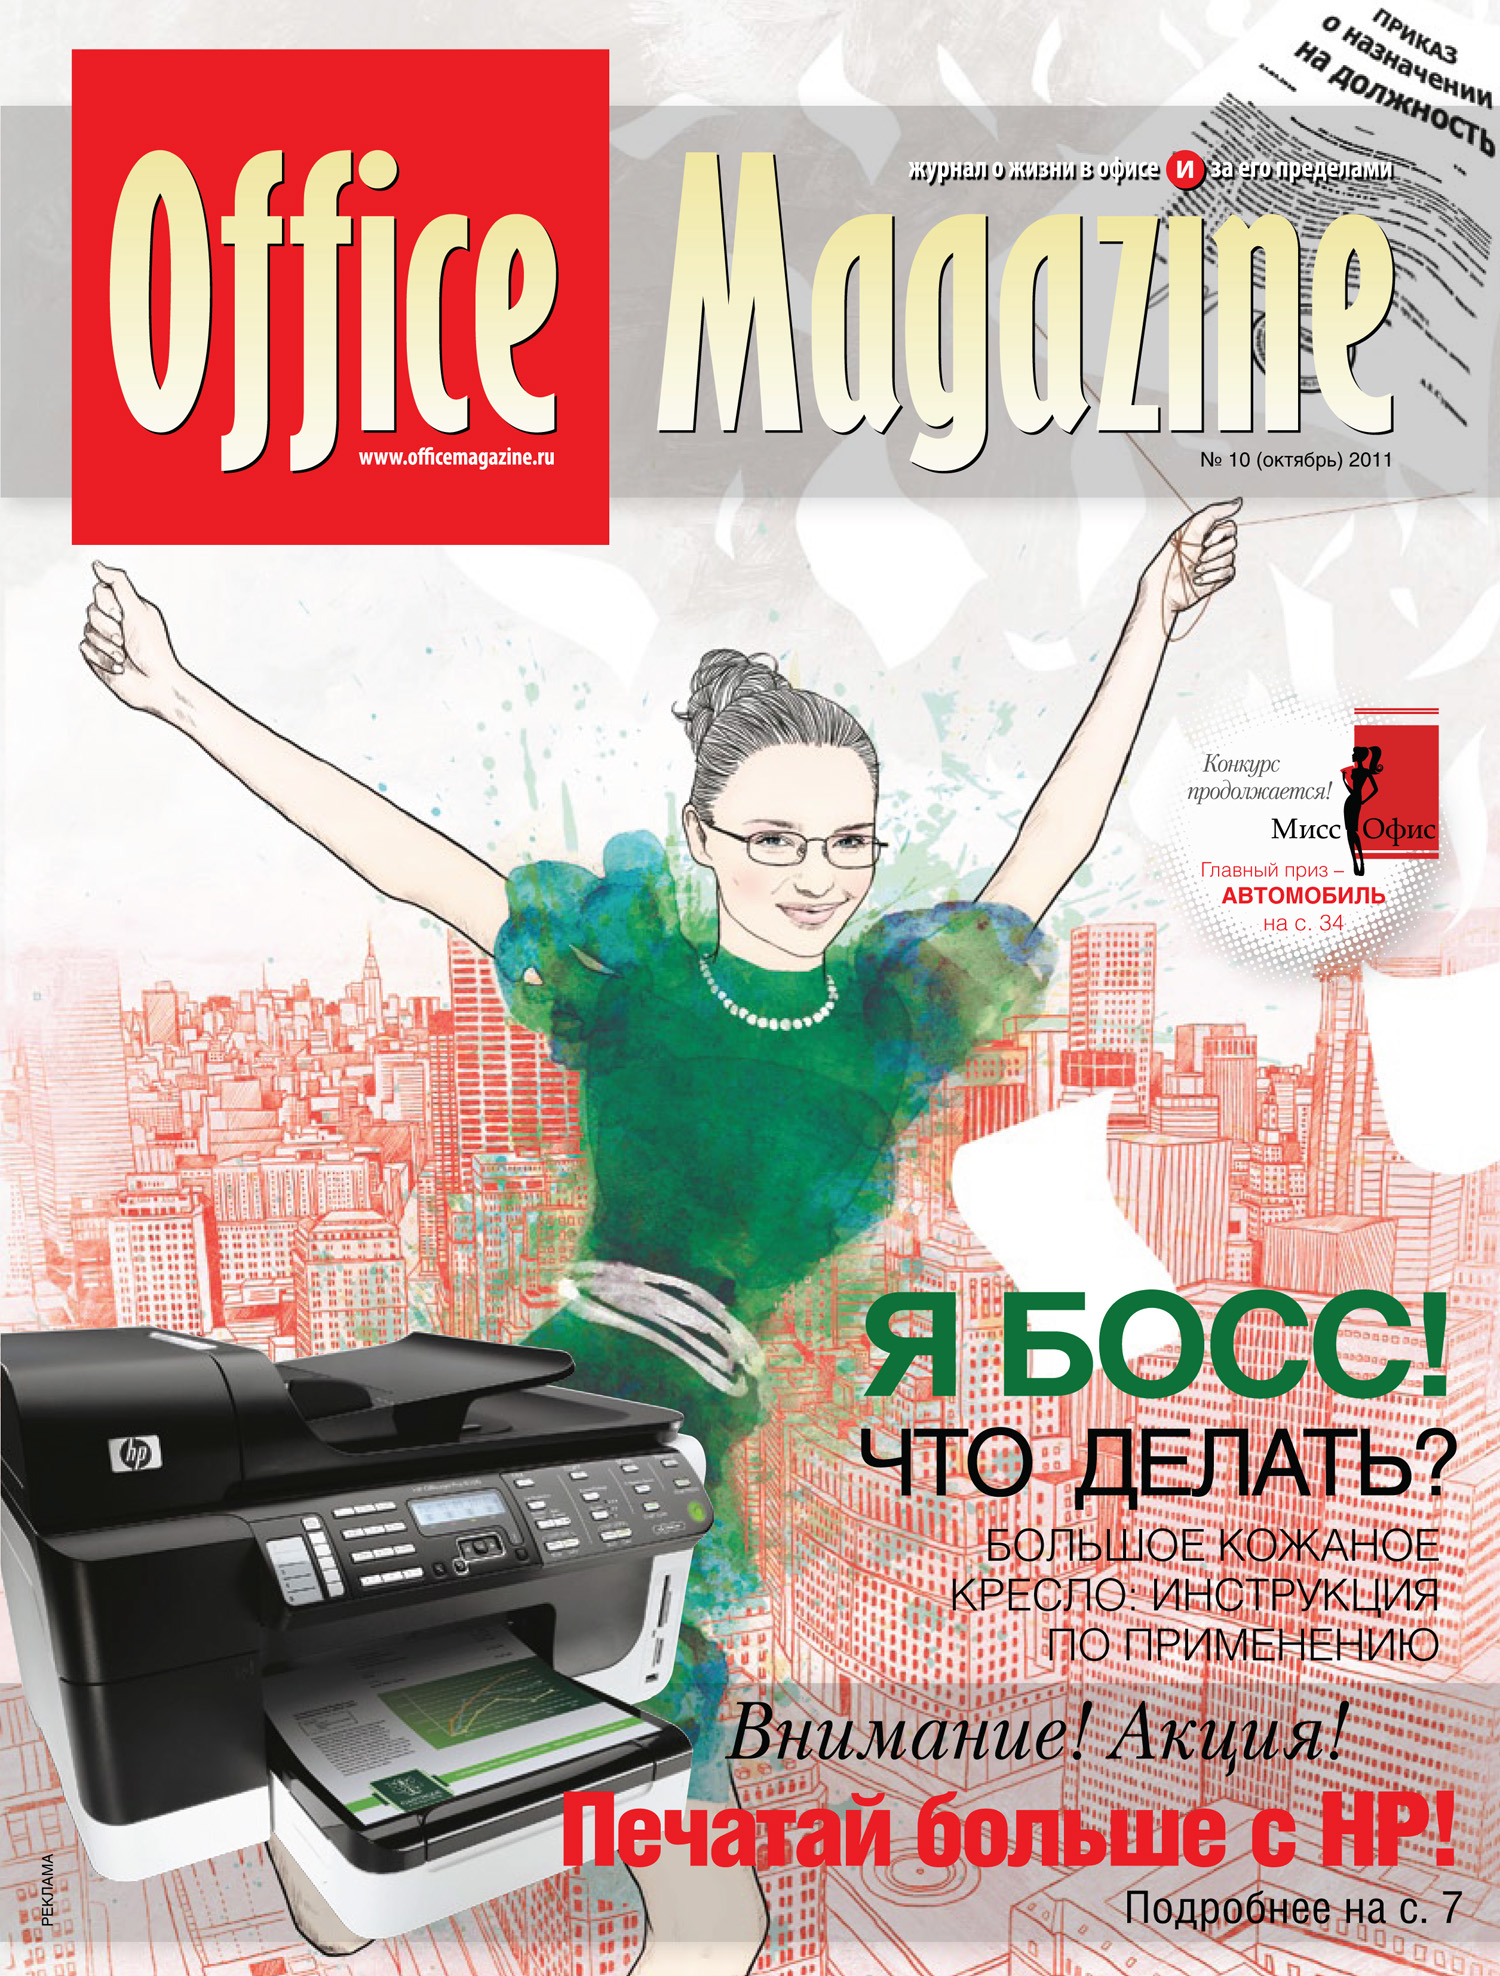 Office Magazine№10 (54) октябрь 2011